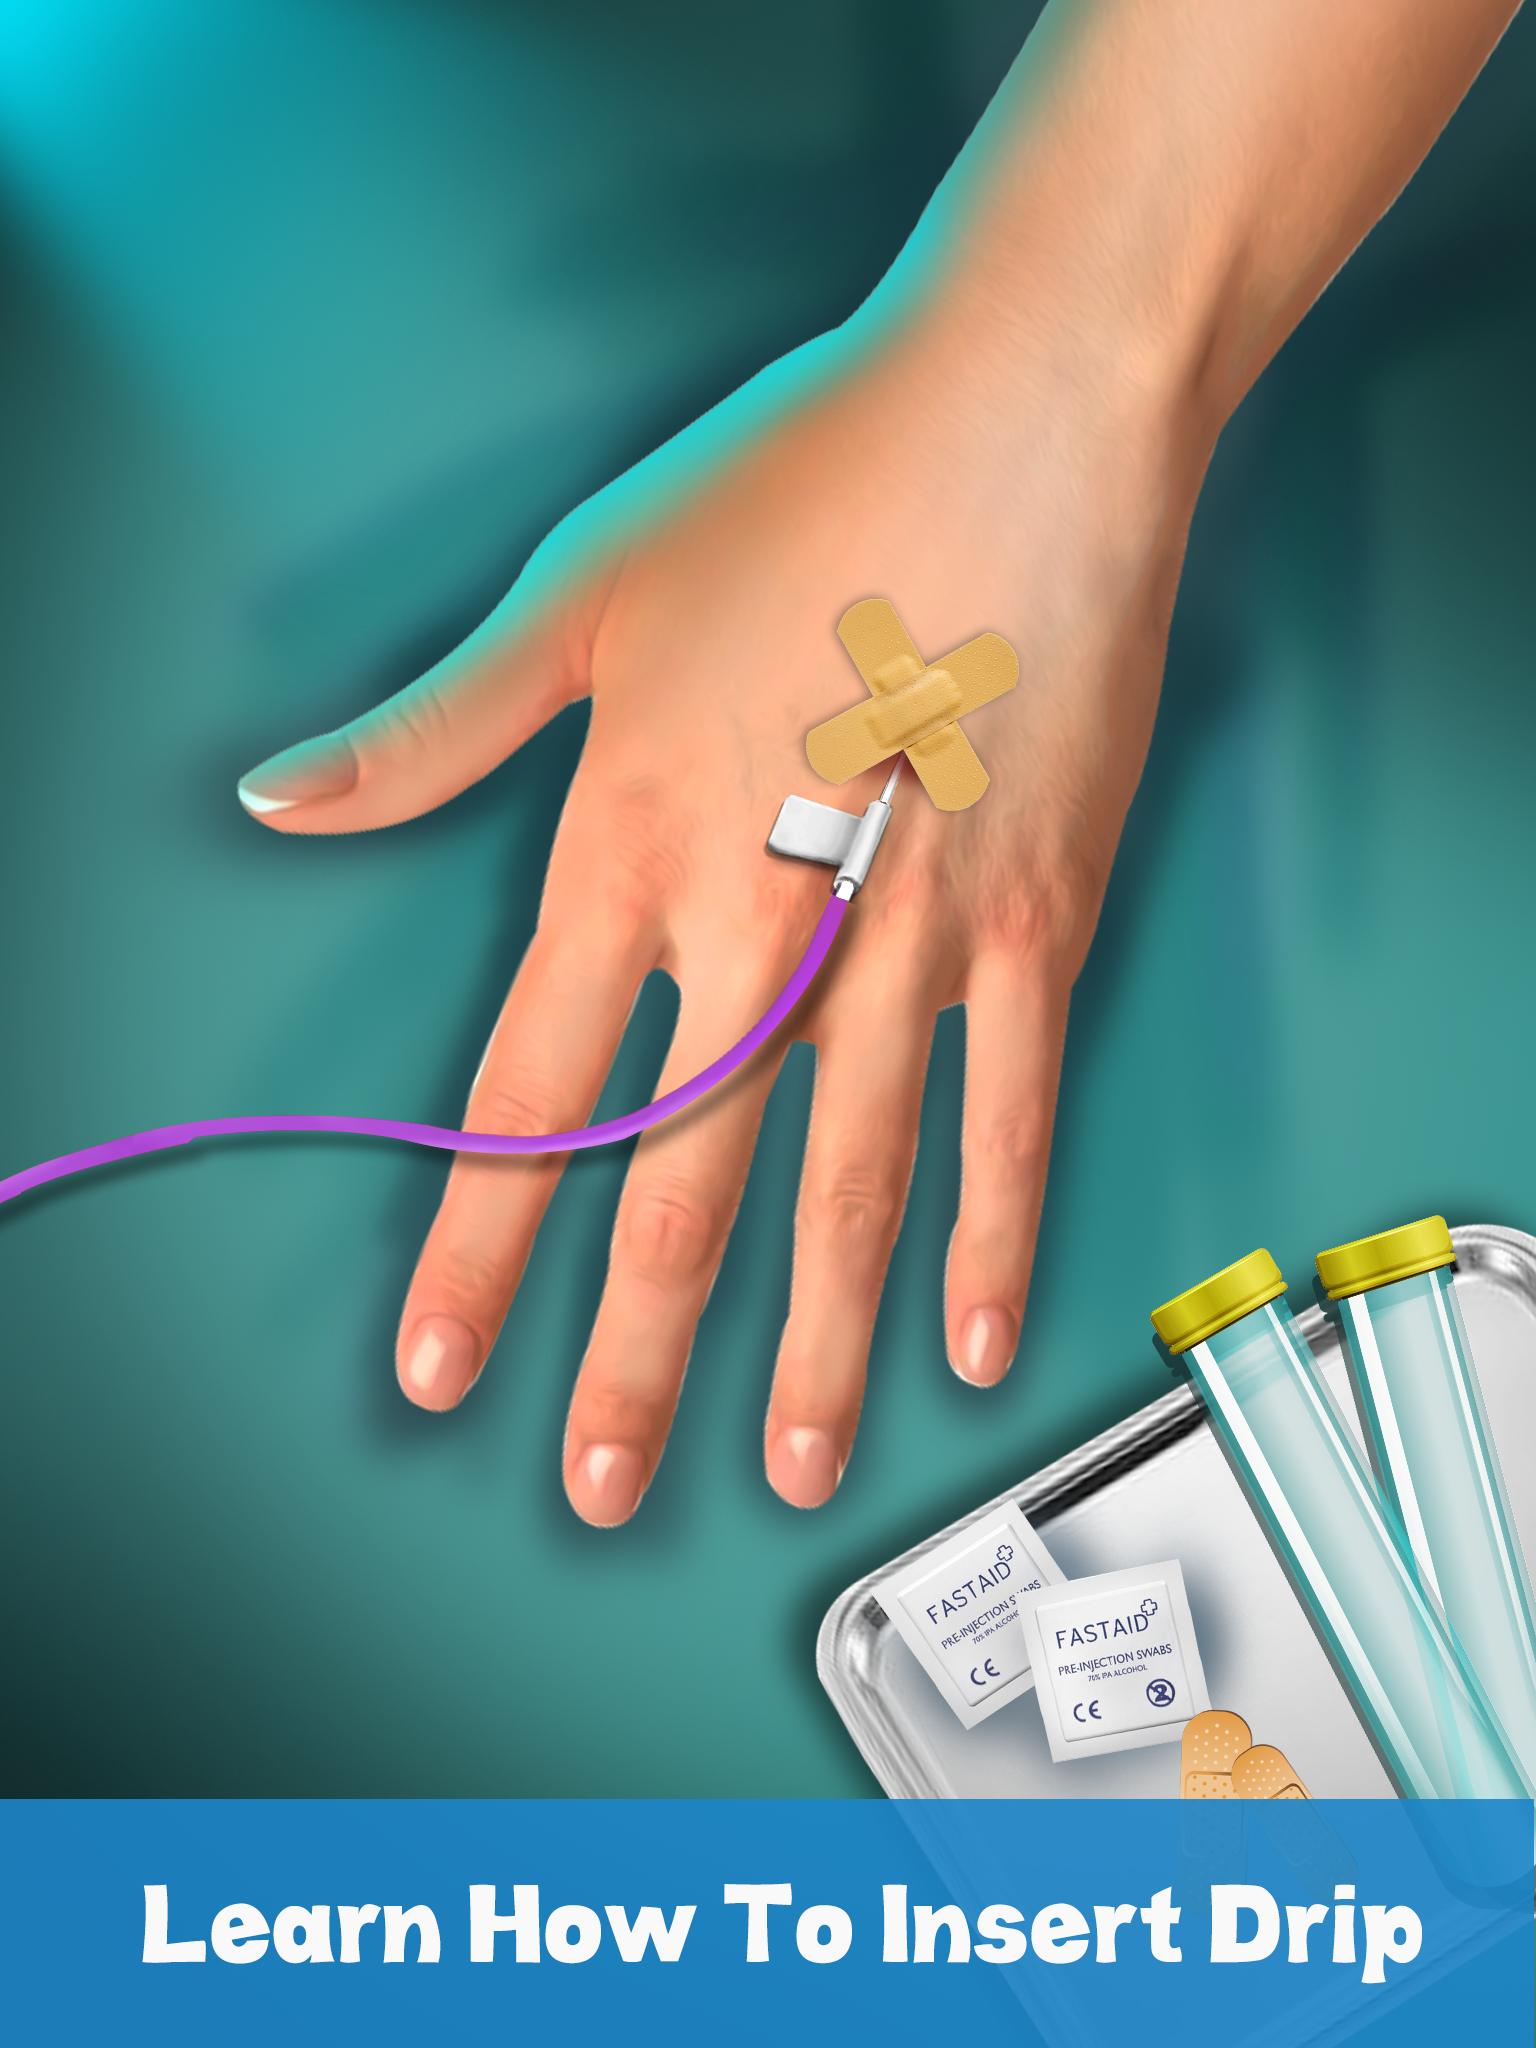 Download do APK de Jogo de Medico: Jogos Cirurgia para Android